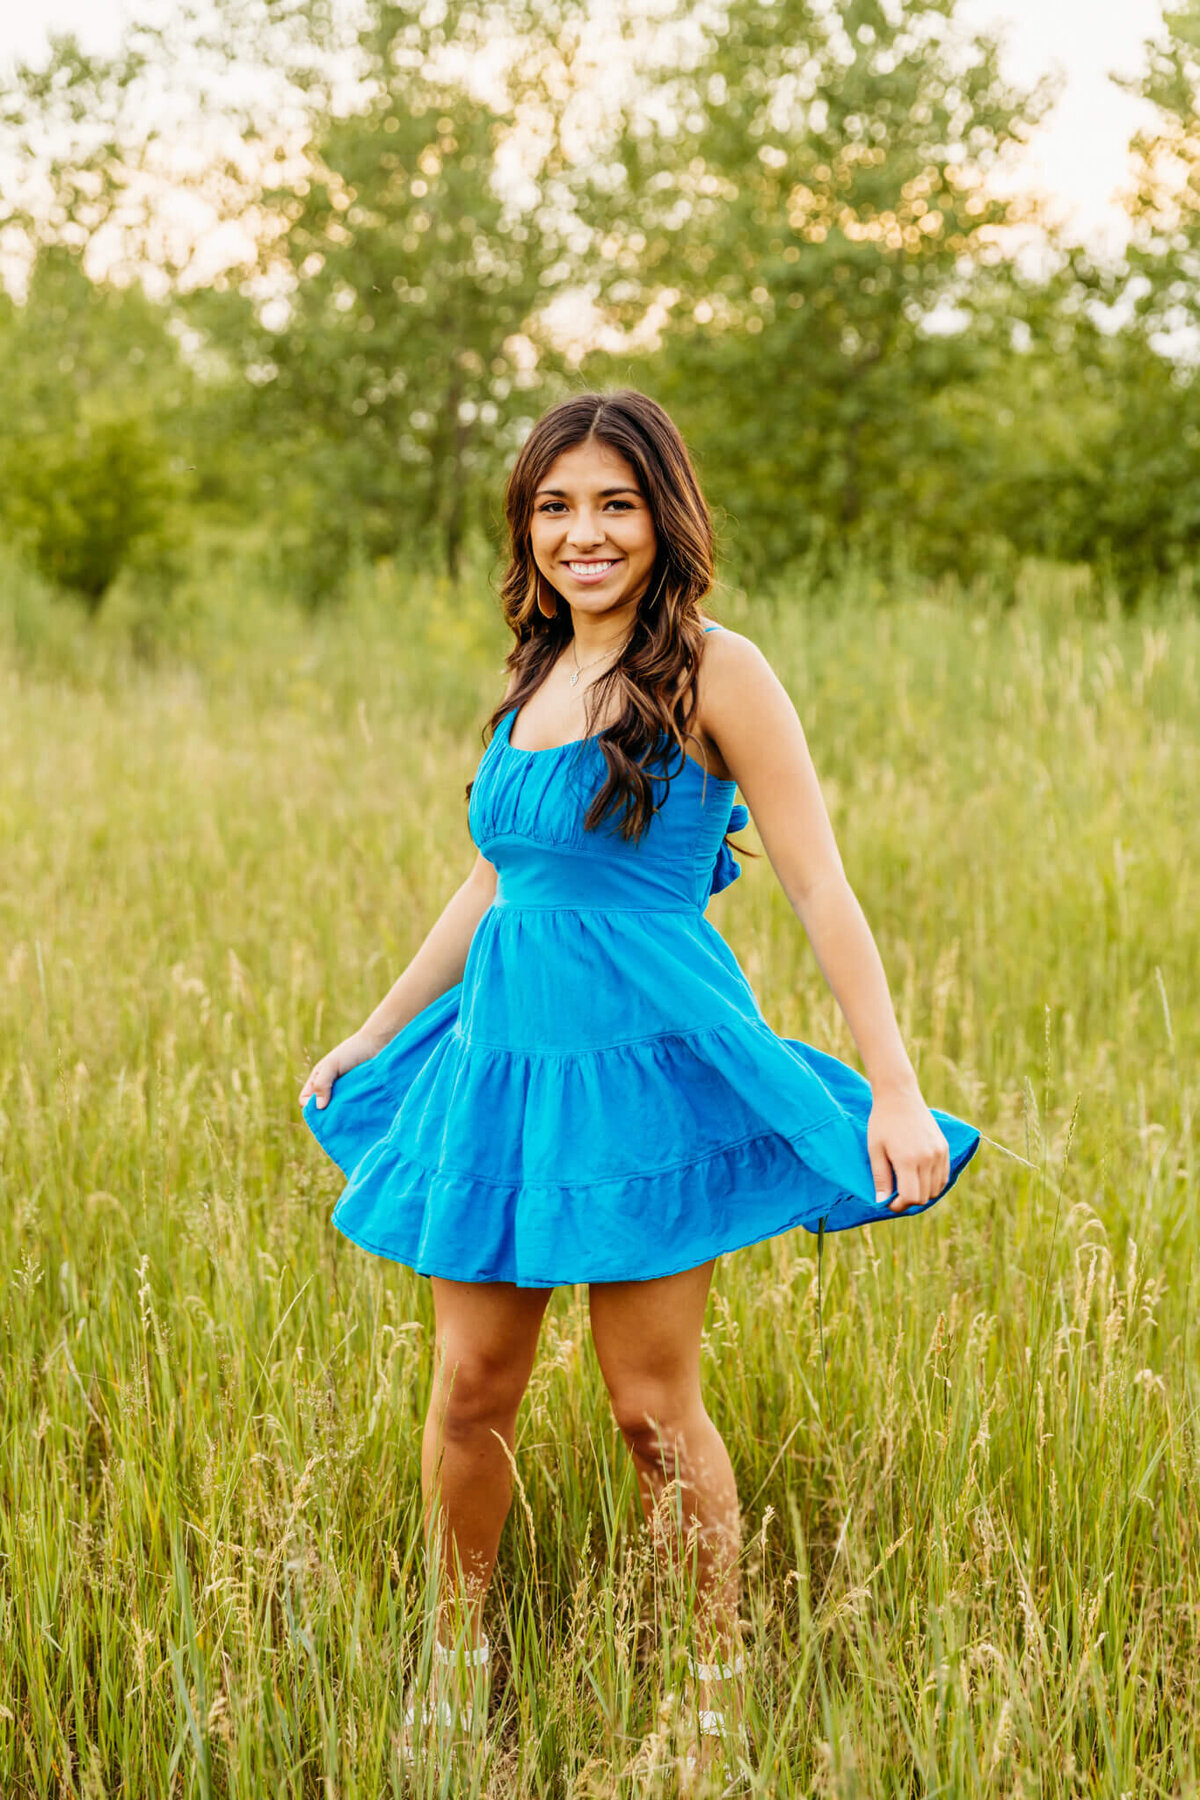 breathtaking senior portrait of a high schooler spinning in her blue dress